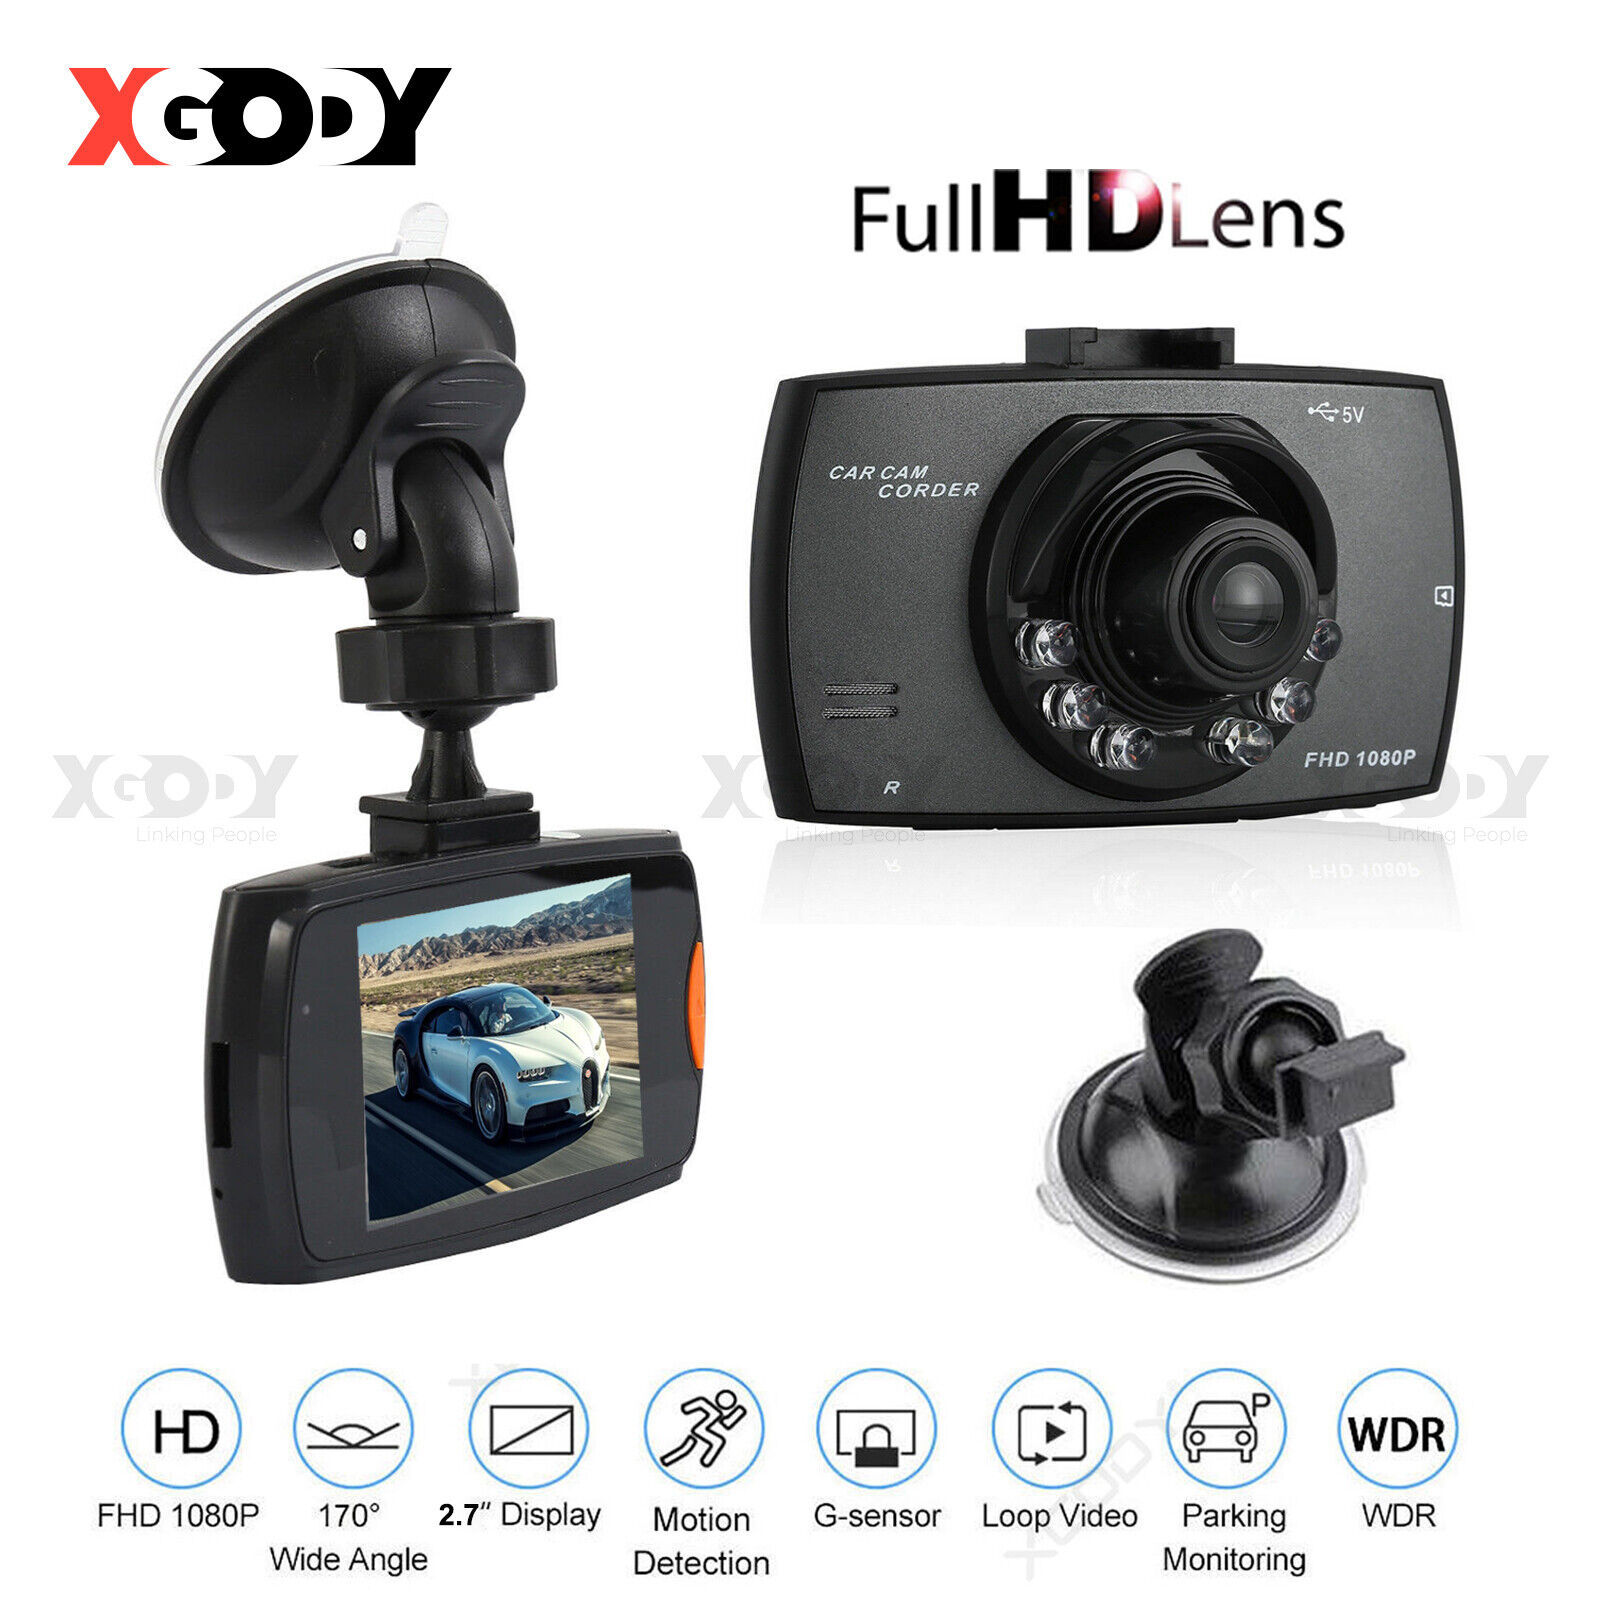  XGODY 2.7" Full HD 1080P Car DVR Dash Cam Vehicle Camera Video Recorder G-senso - $22.39